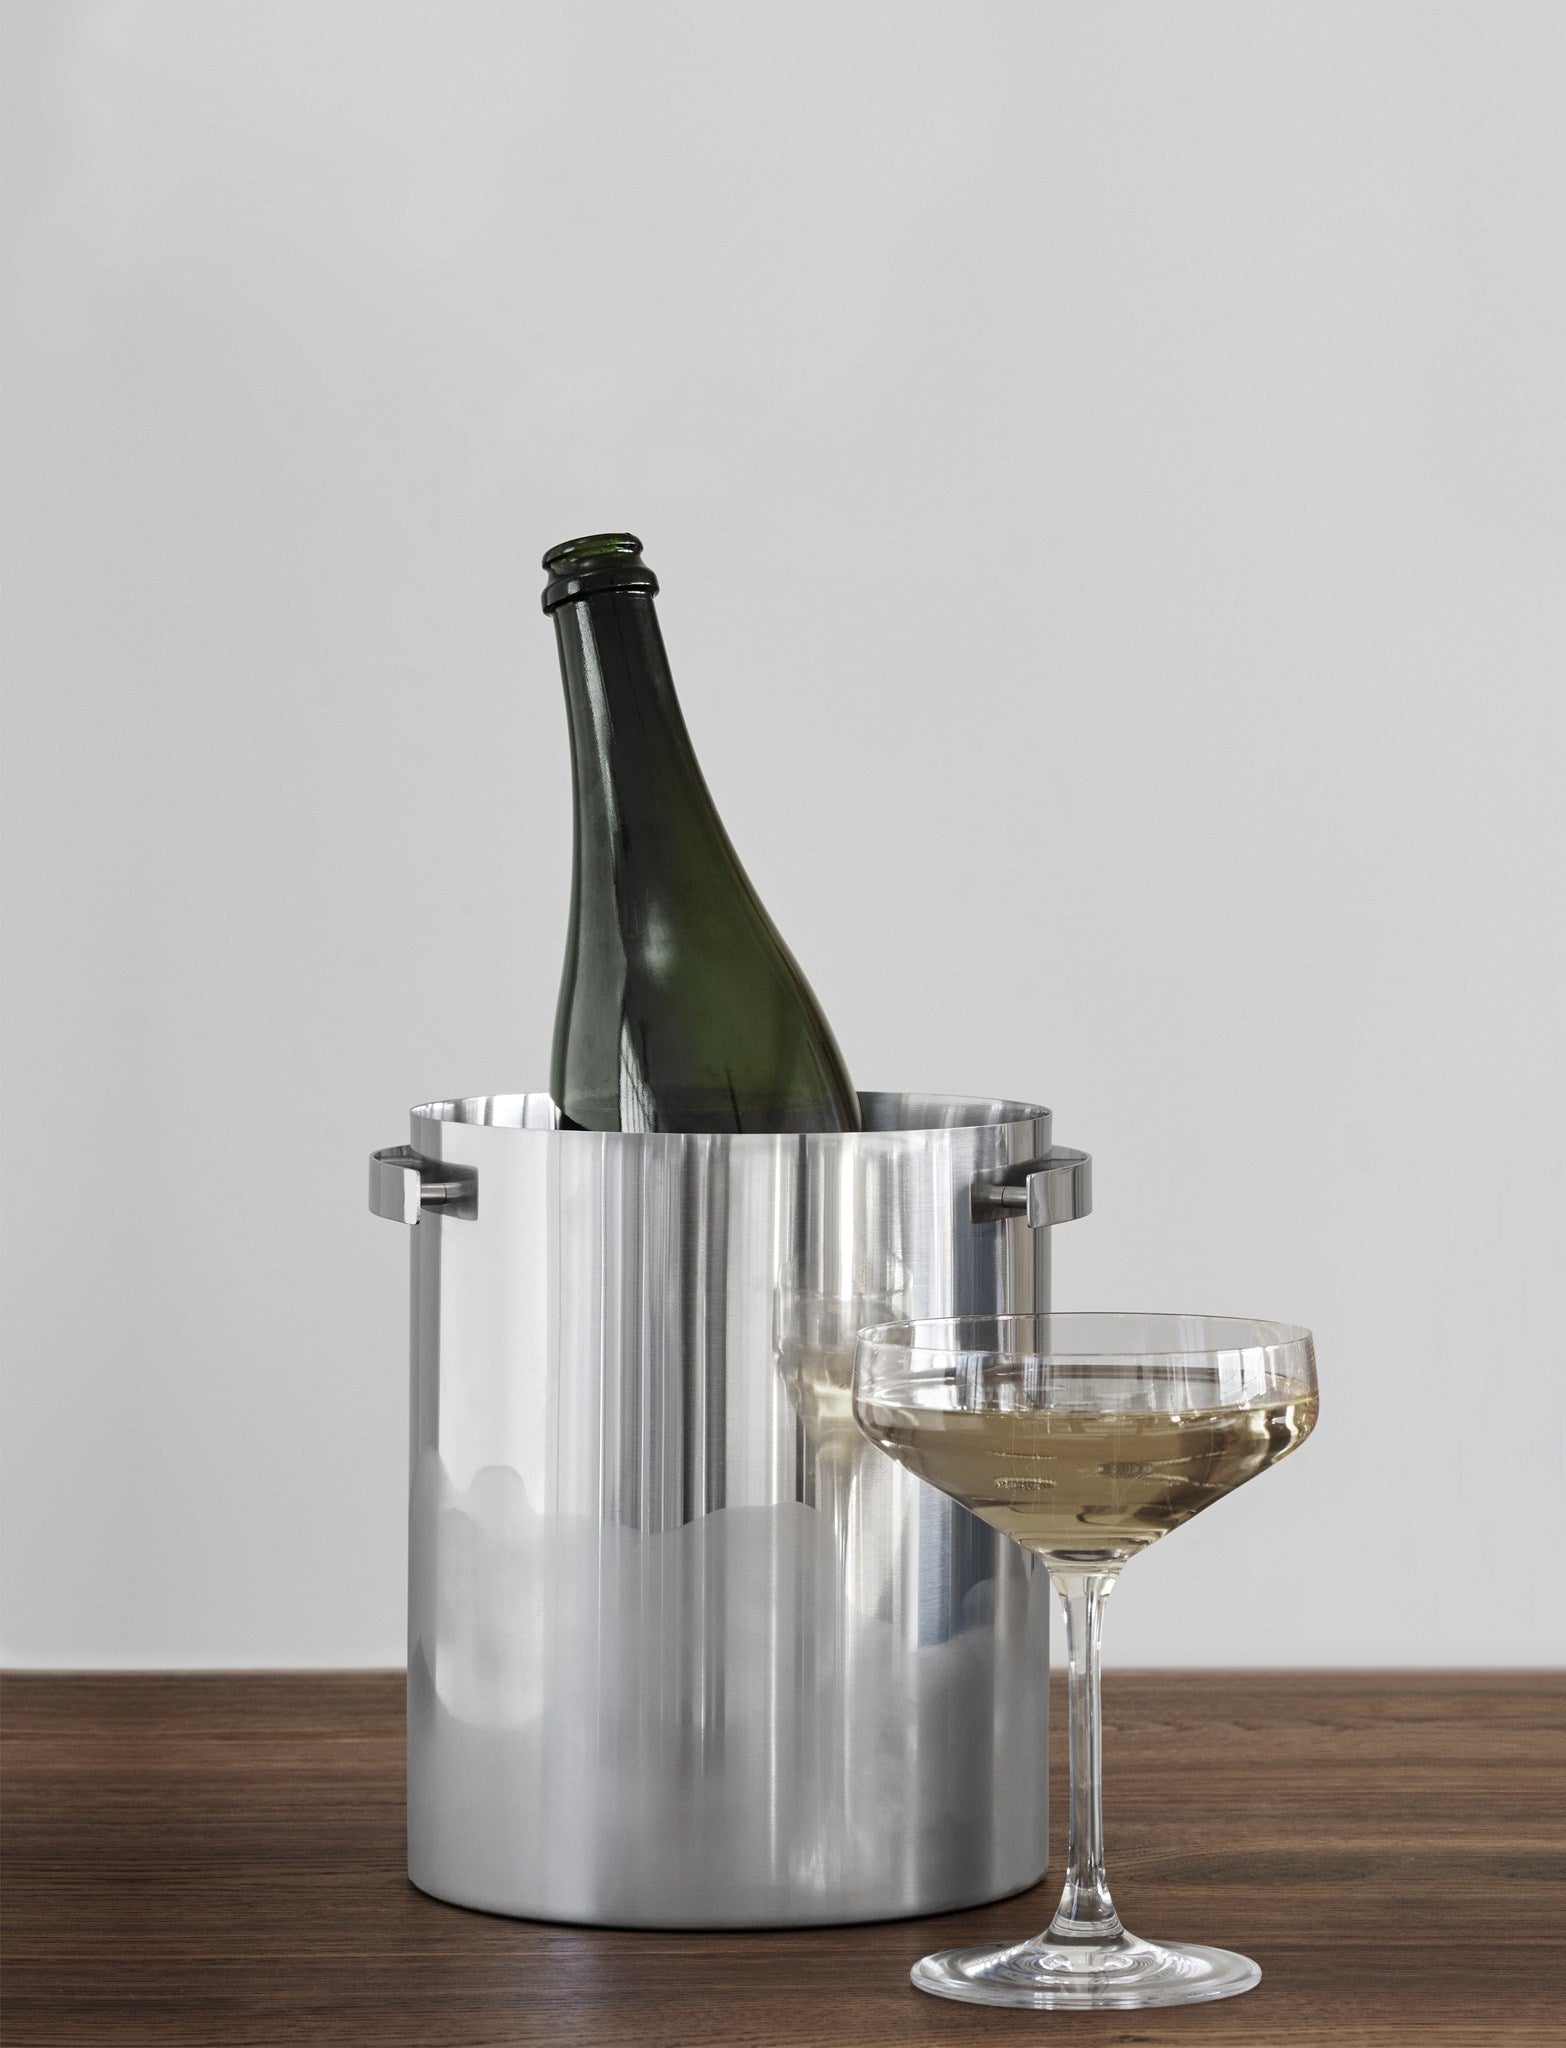 Stelton Arne Jacobsen Refroidisseur de champagne